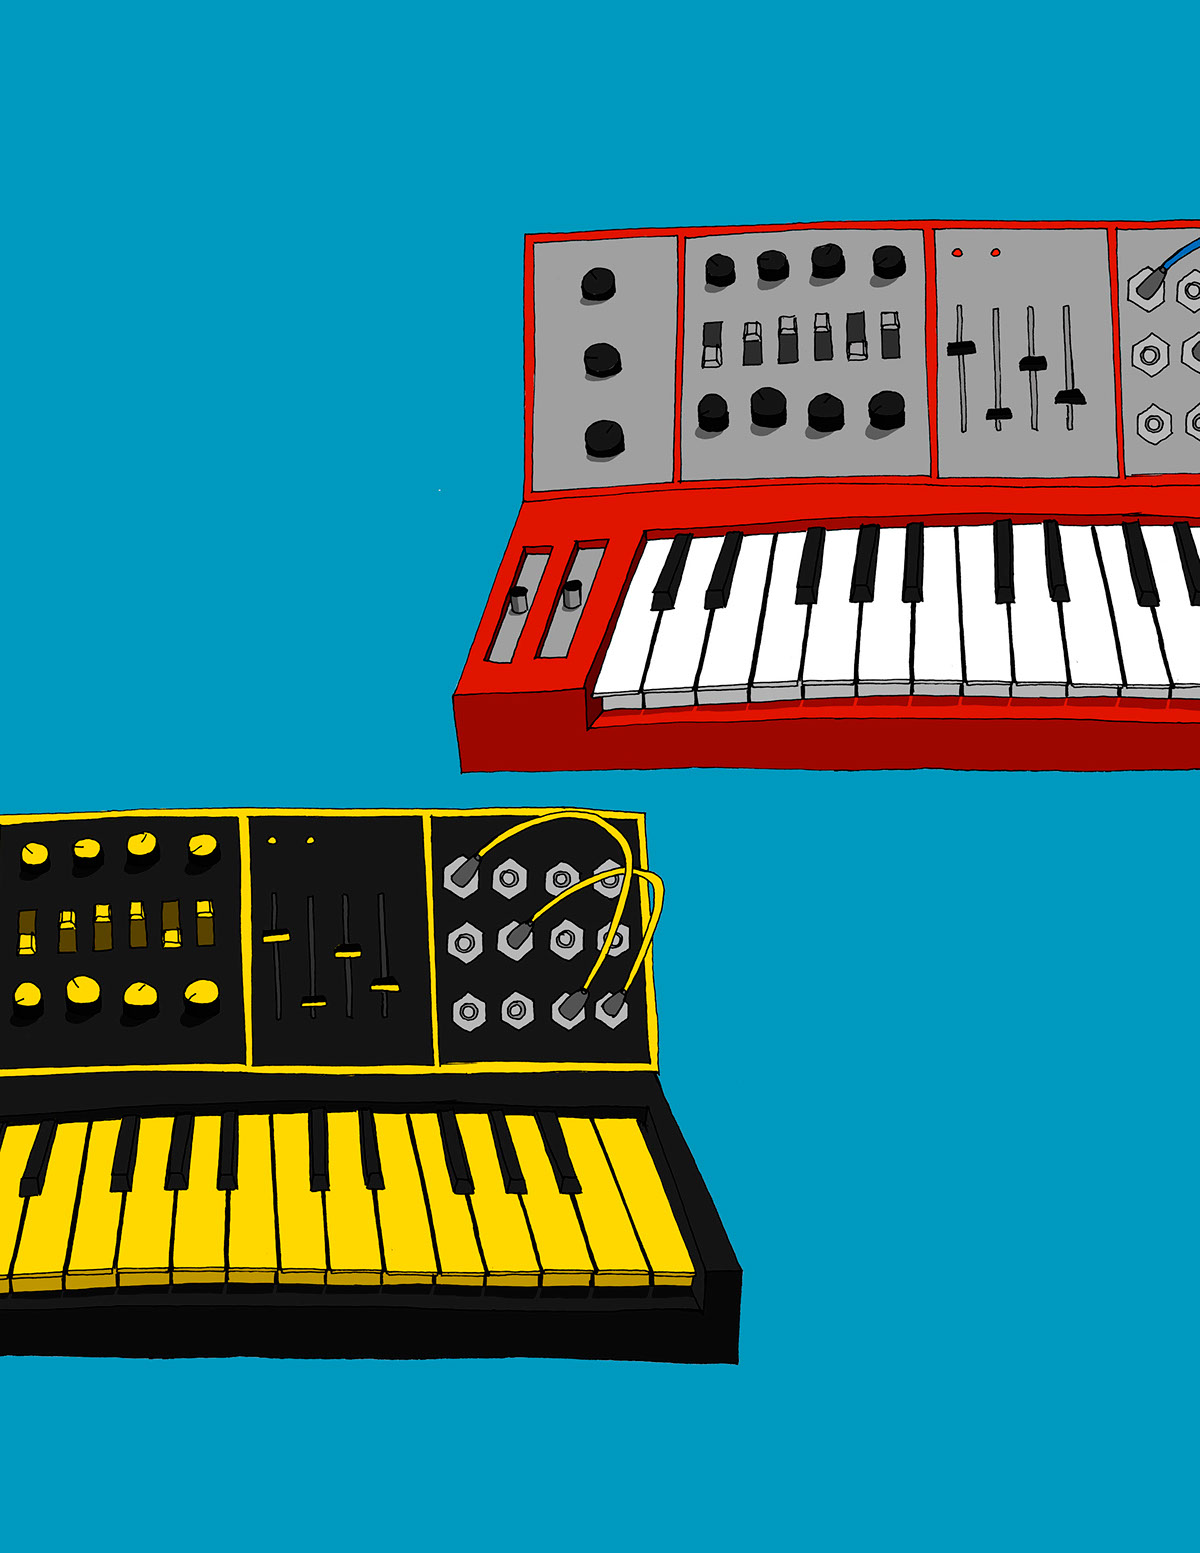 Axoloti synthesizer drum machine guitar effects Electronics